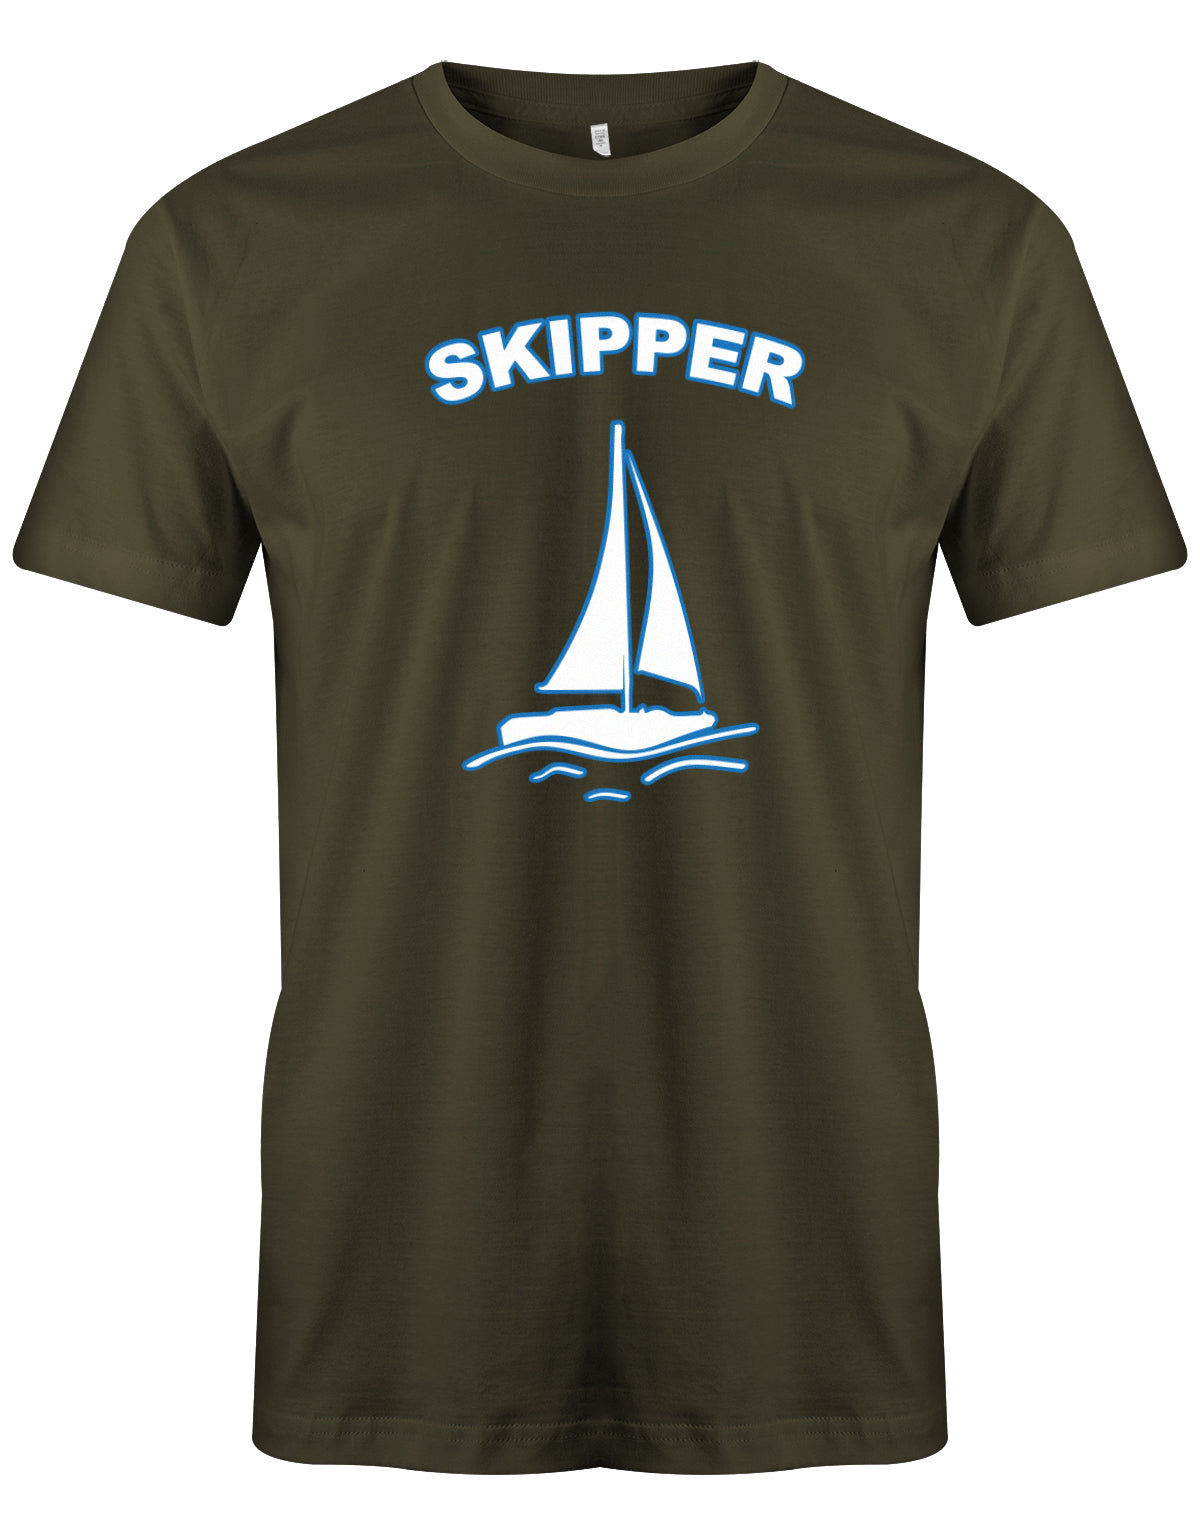 Skipper Segler - Segeln - Herren T-Shirt Army